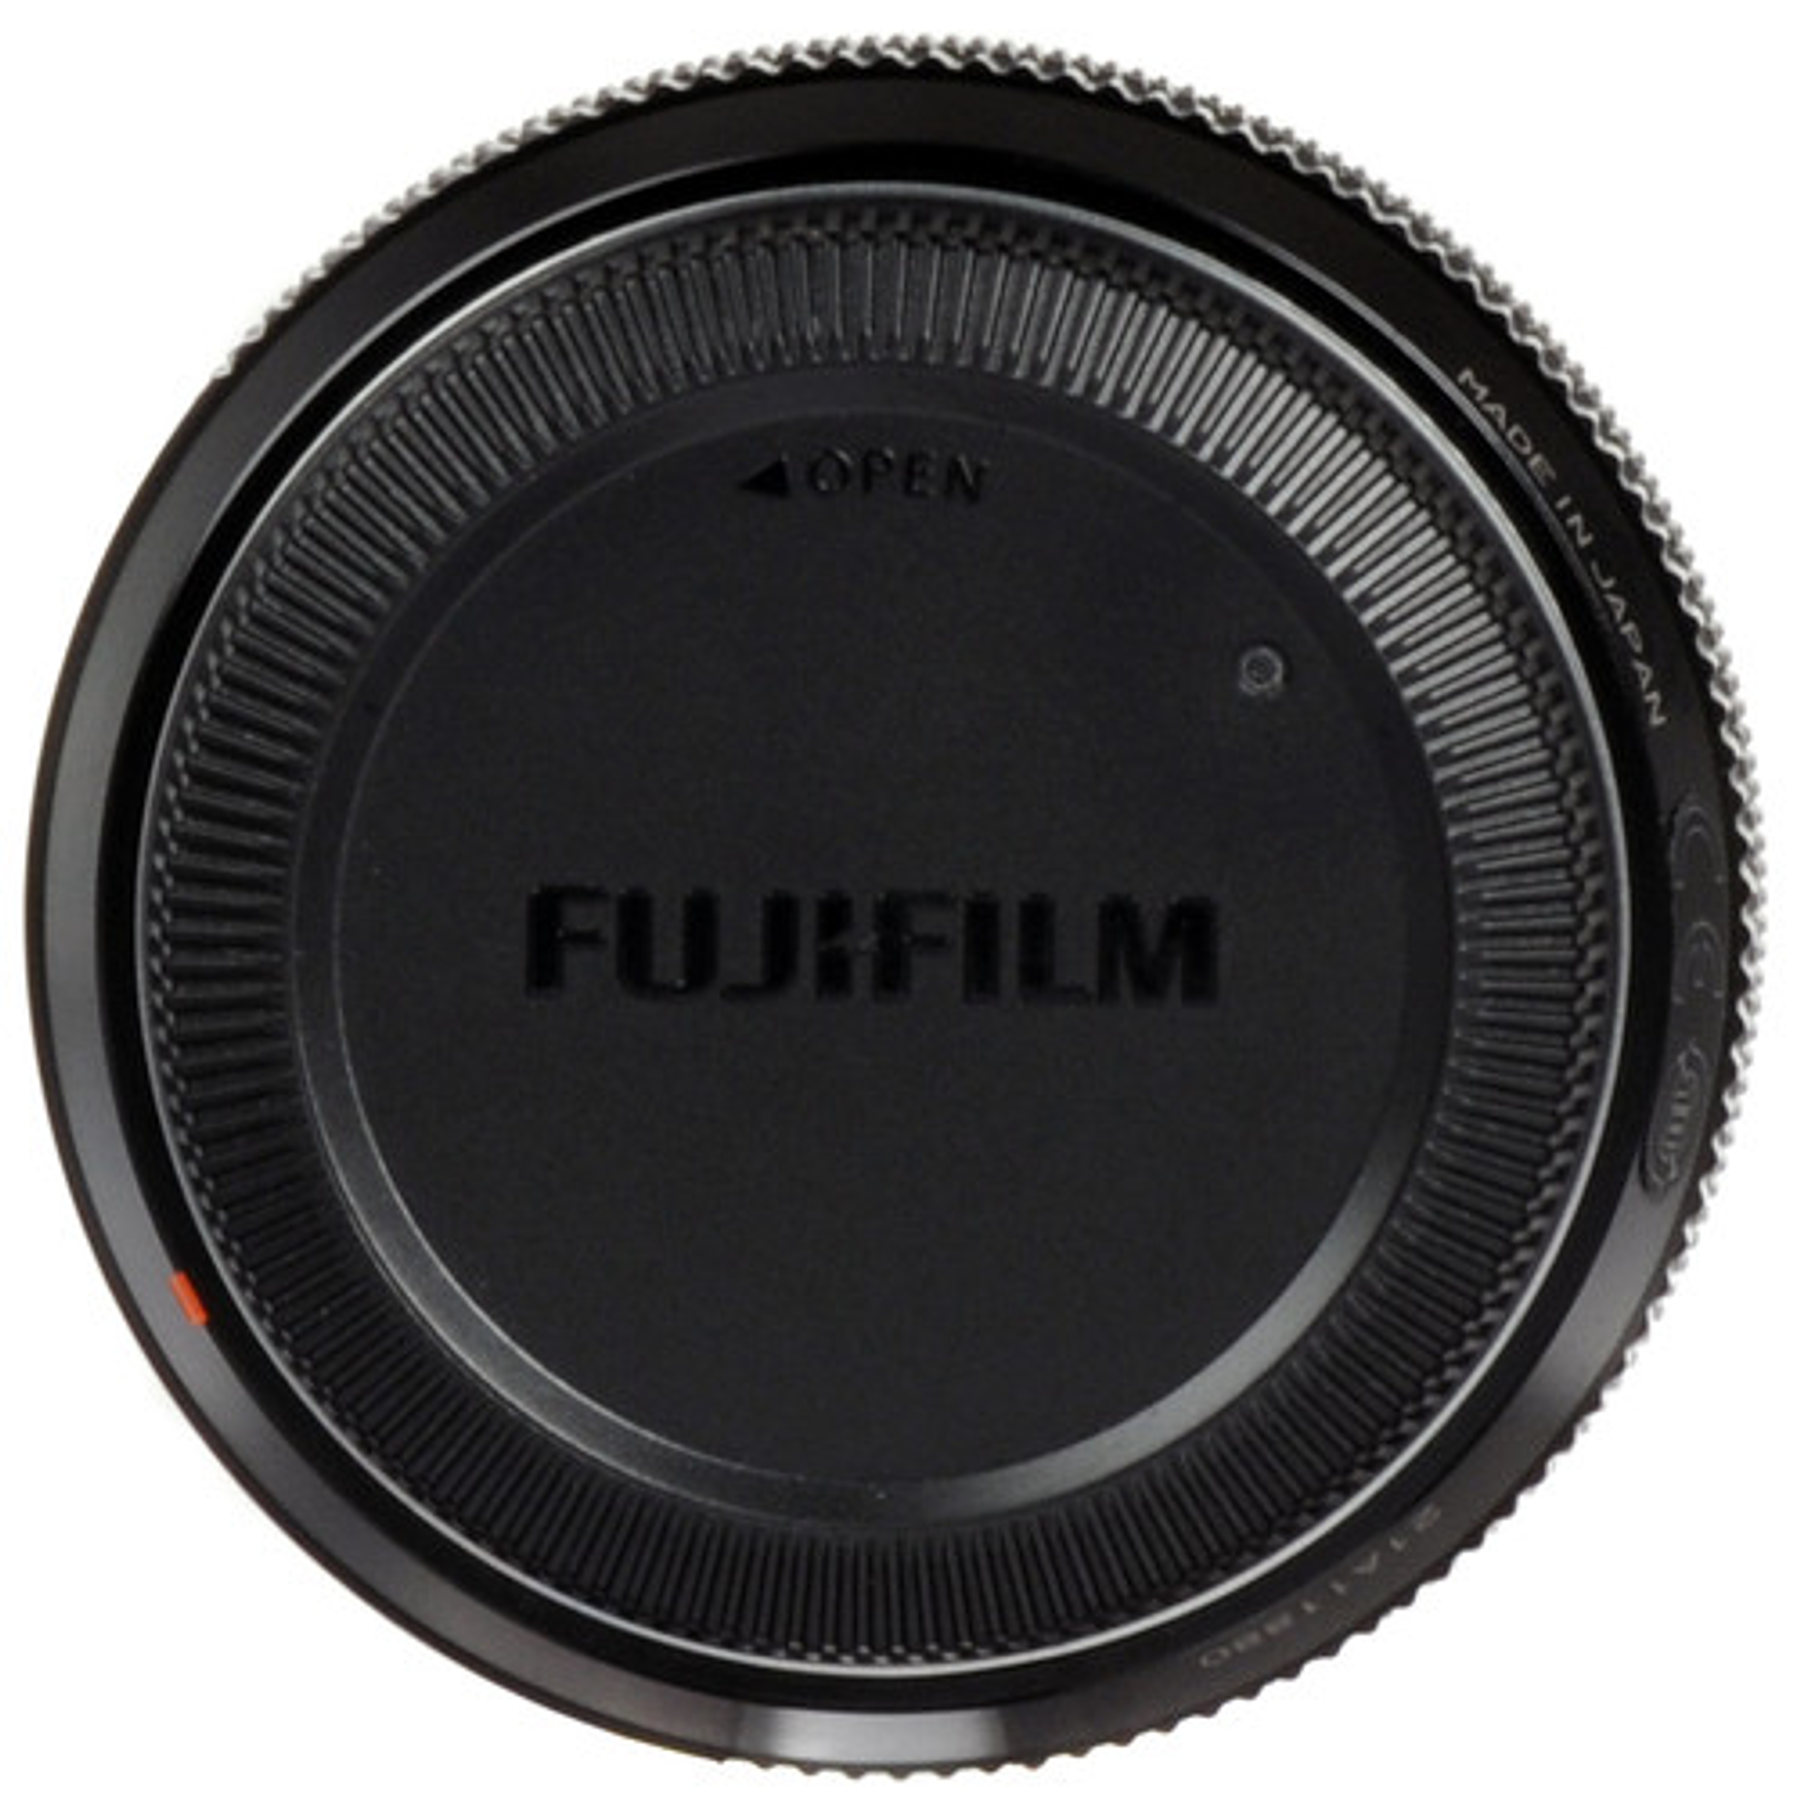 Fujifilm XF 18mm f2.0 R